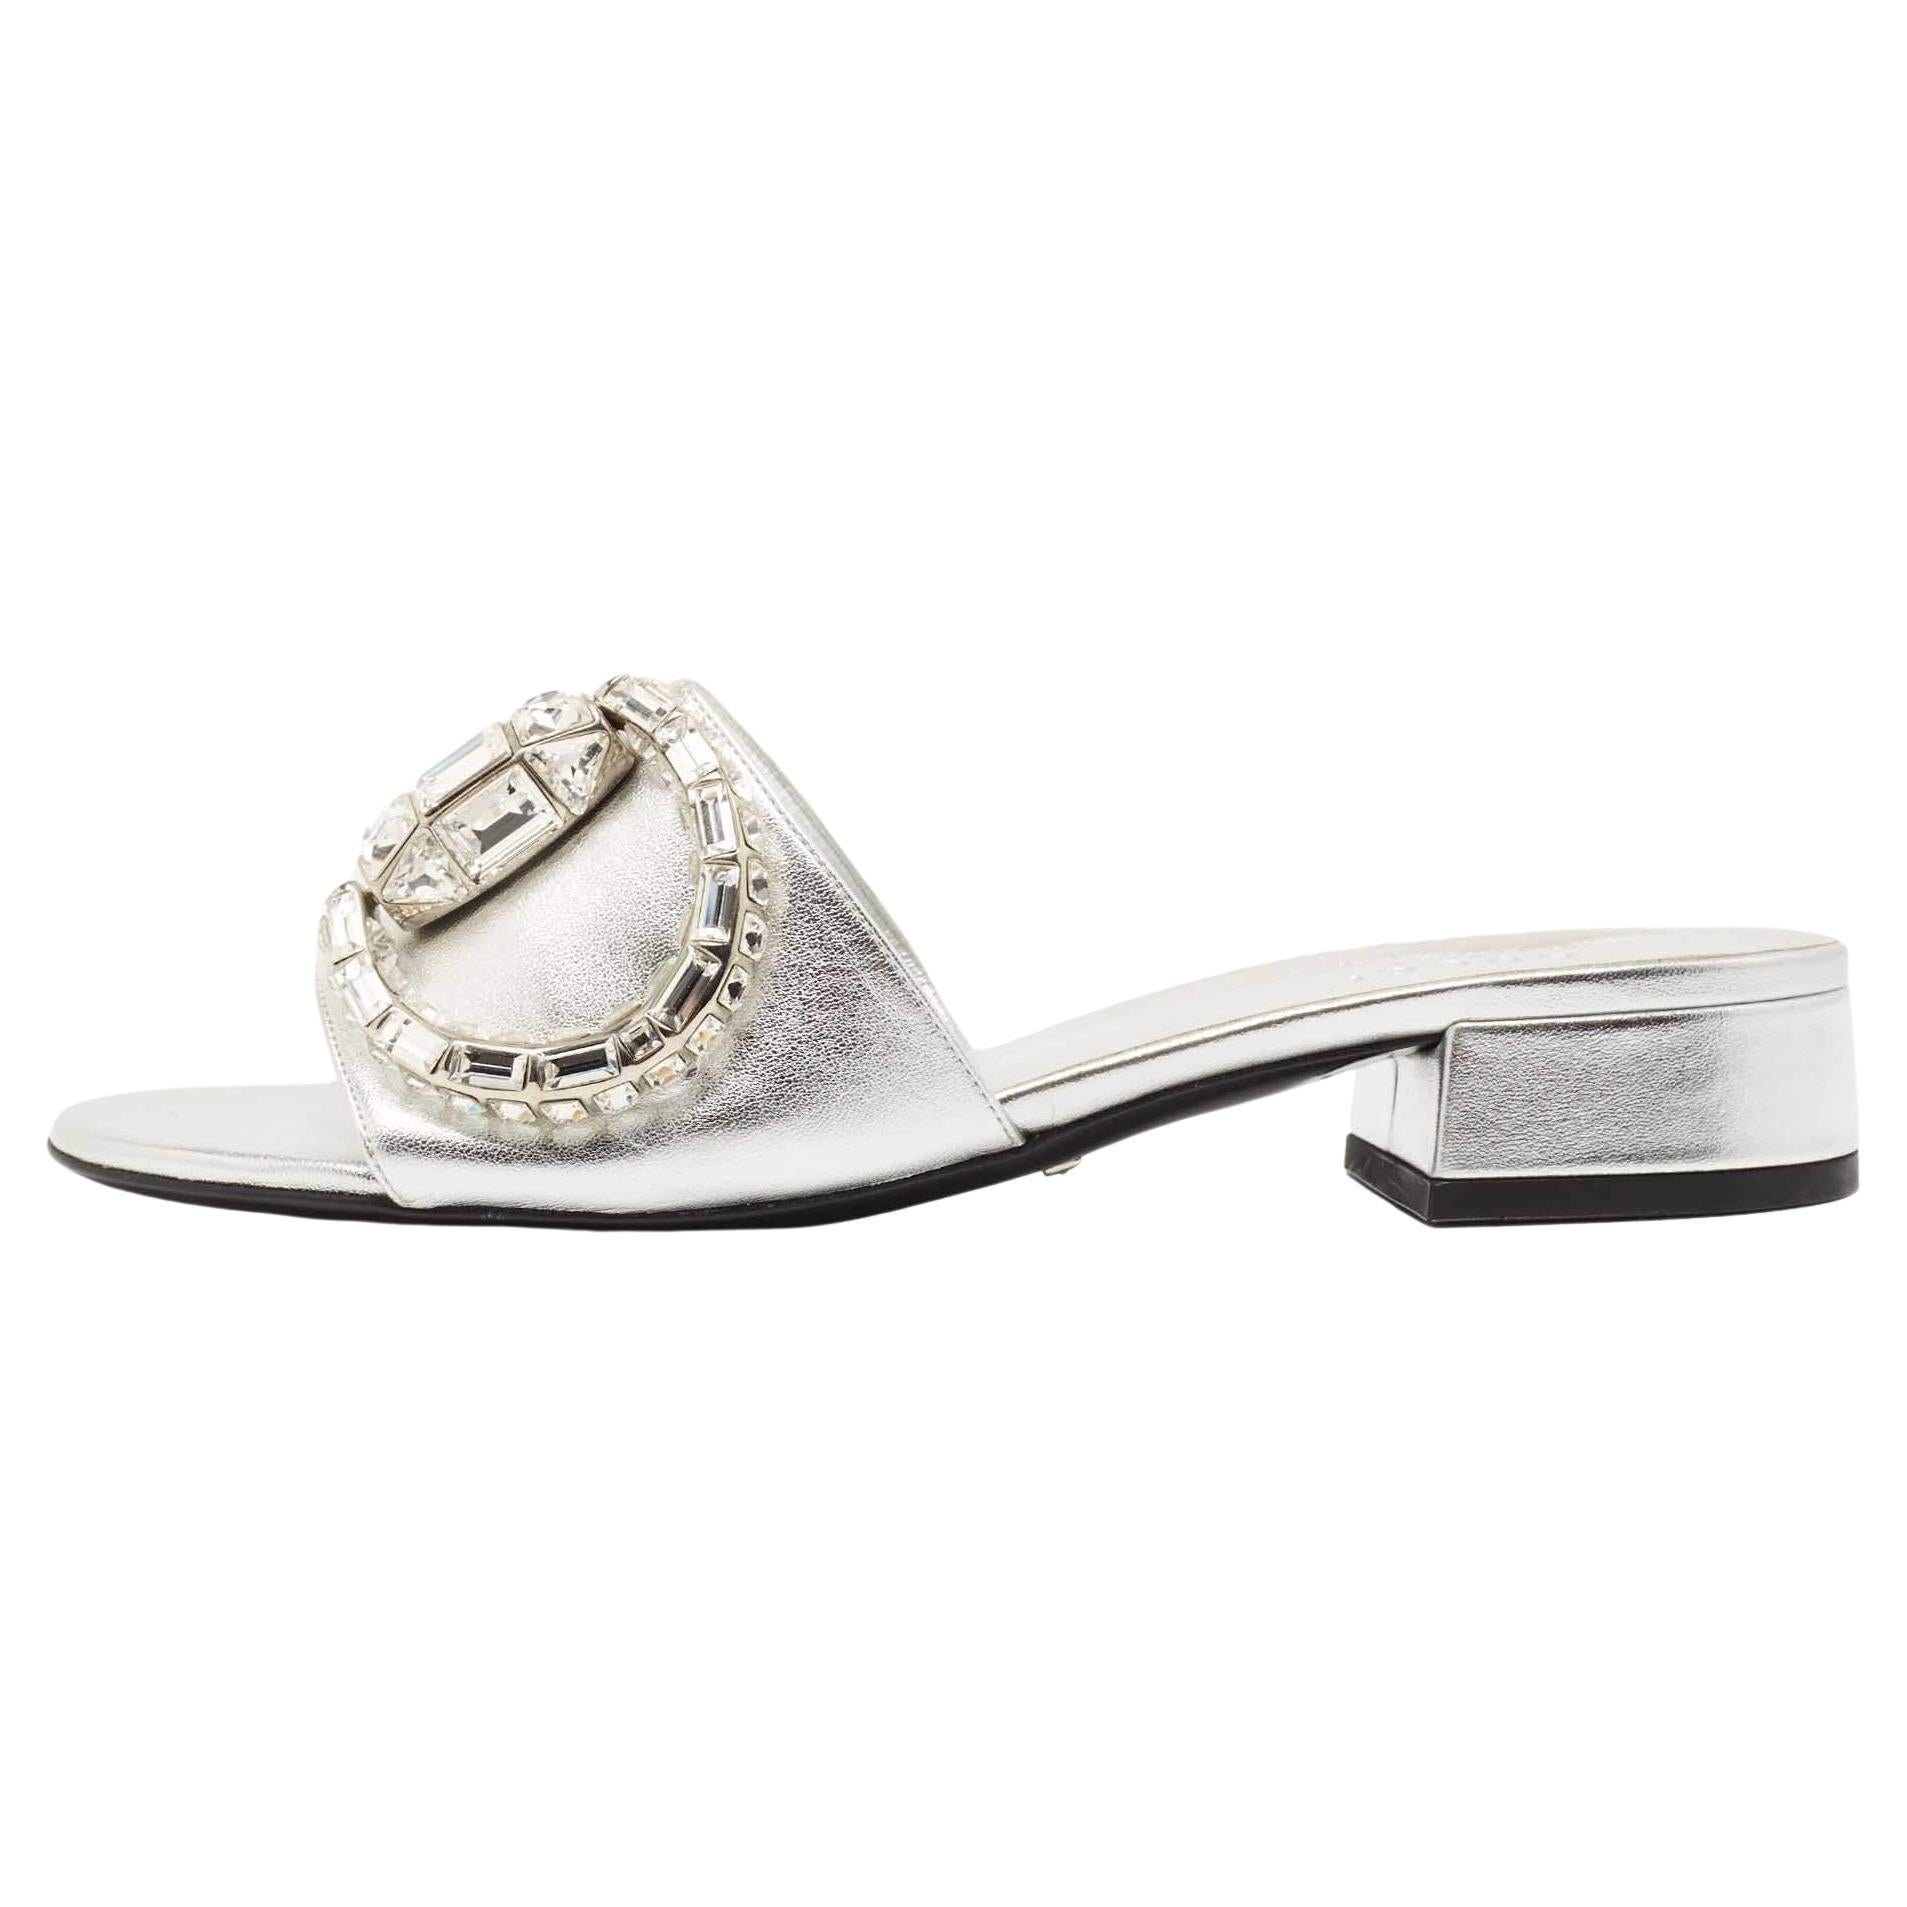 Gucci Silver Leather Crystal Embellished Maxime Slide Sandals Size 37.5